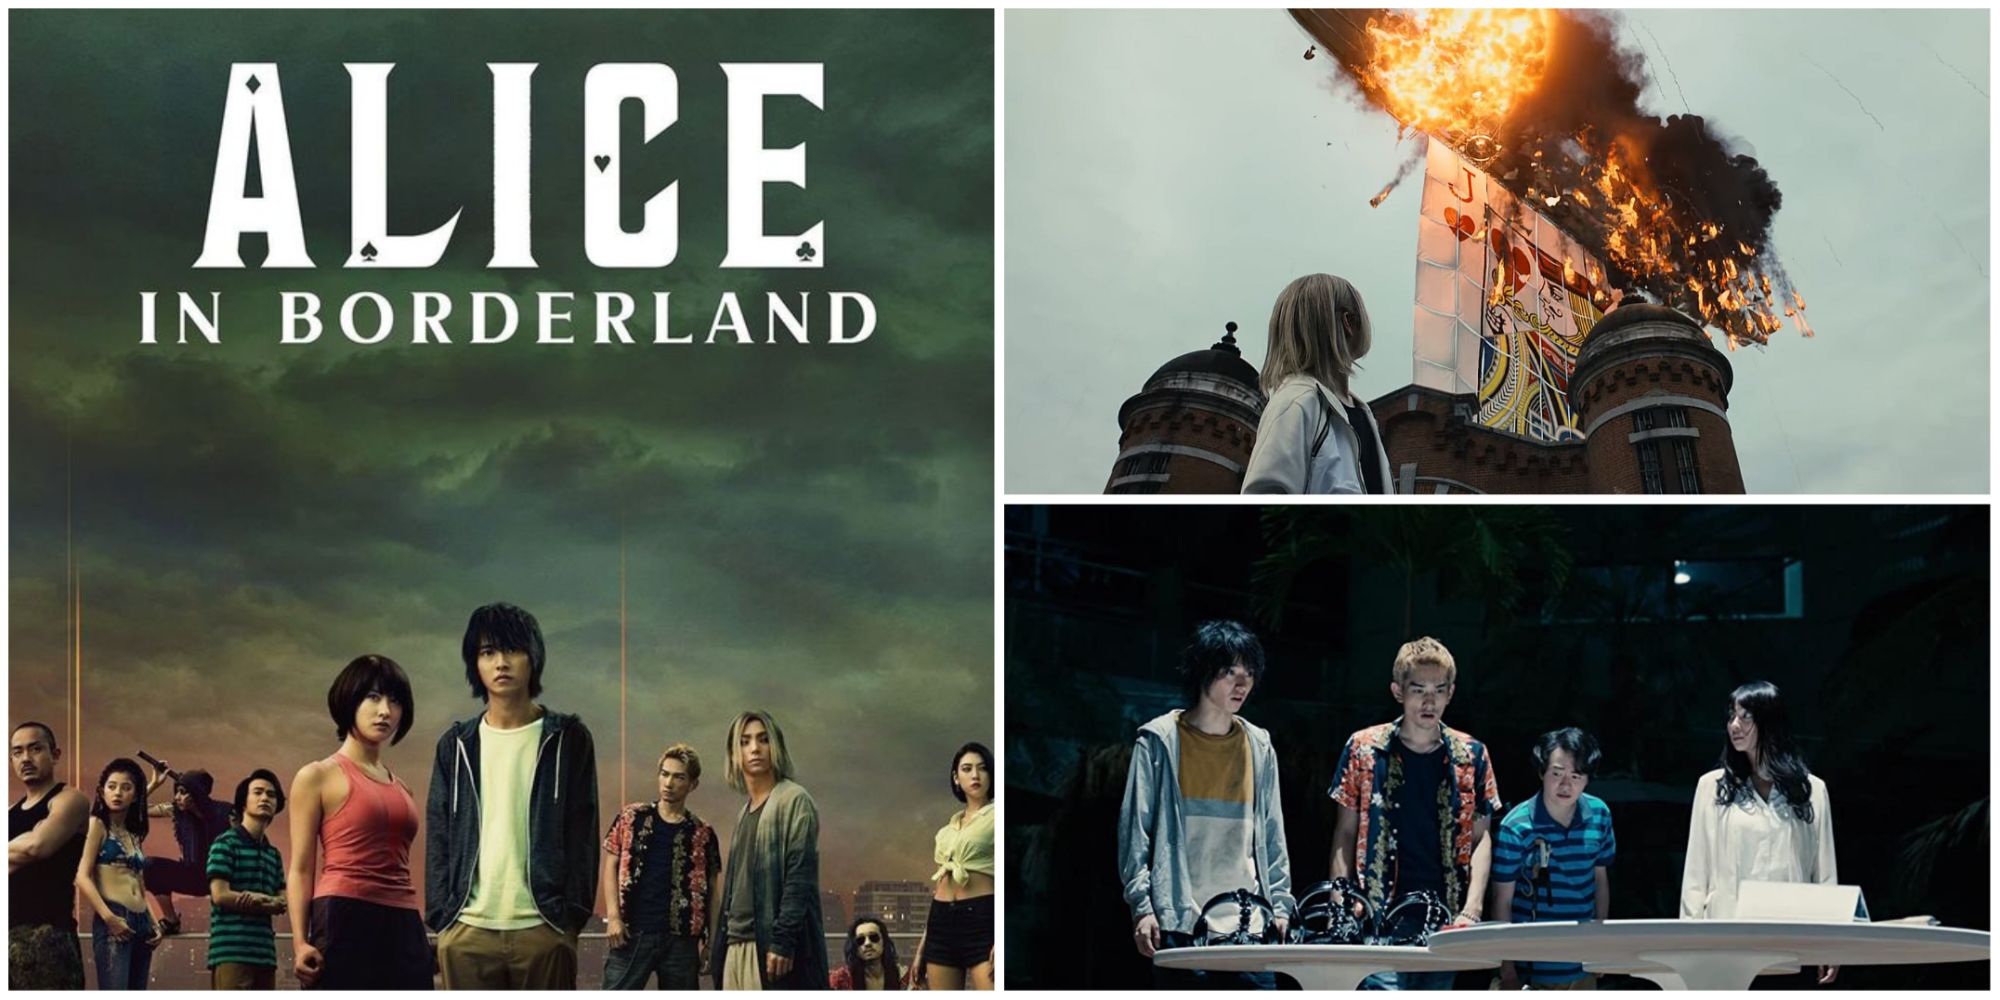 Netflix: Alice In Borderland